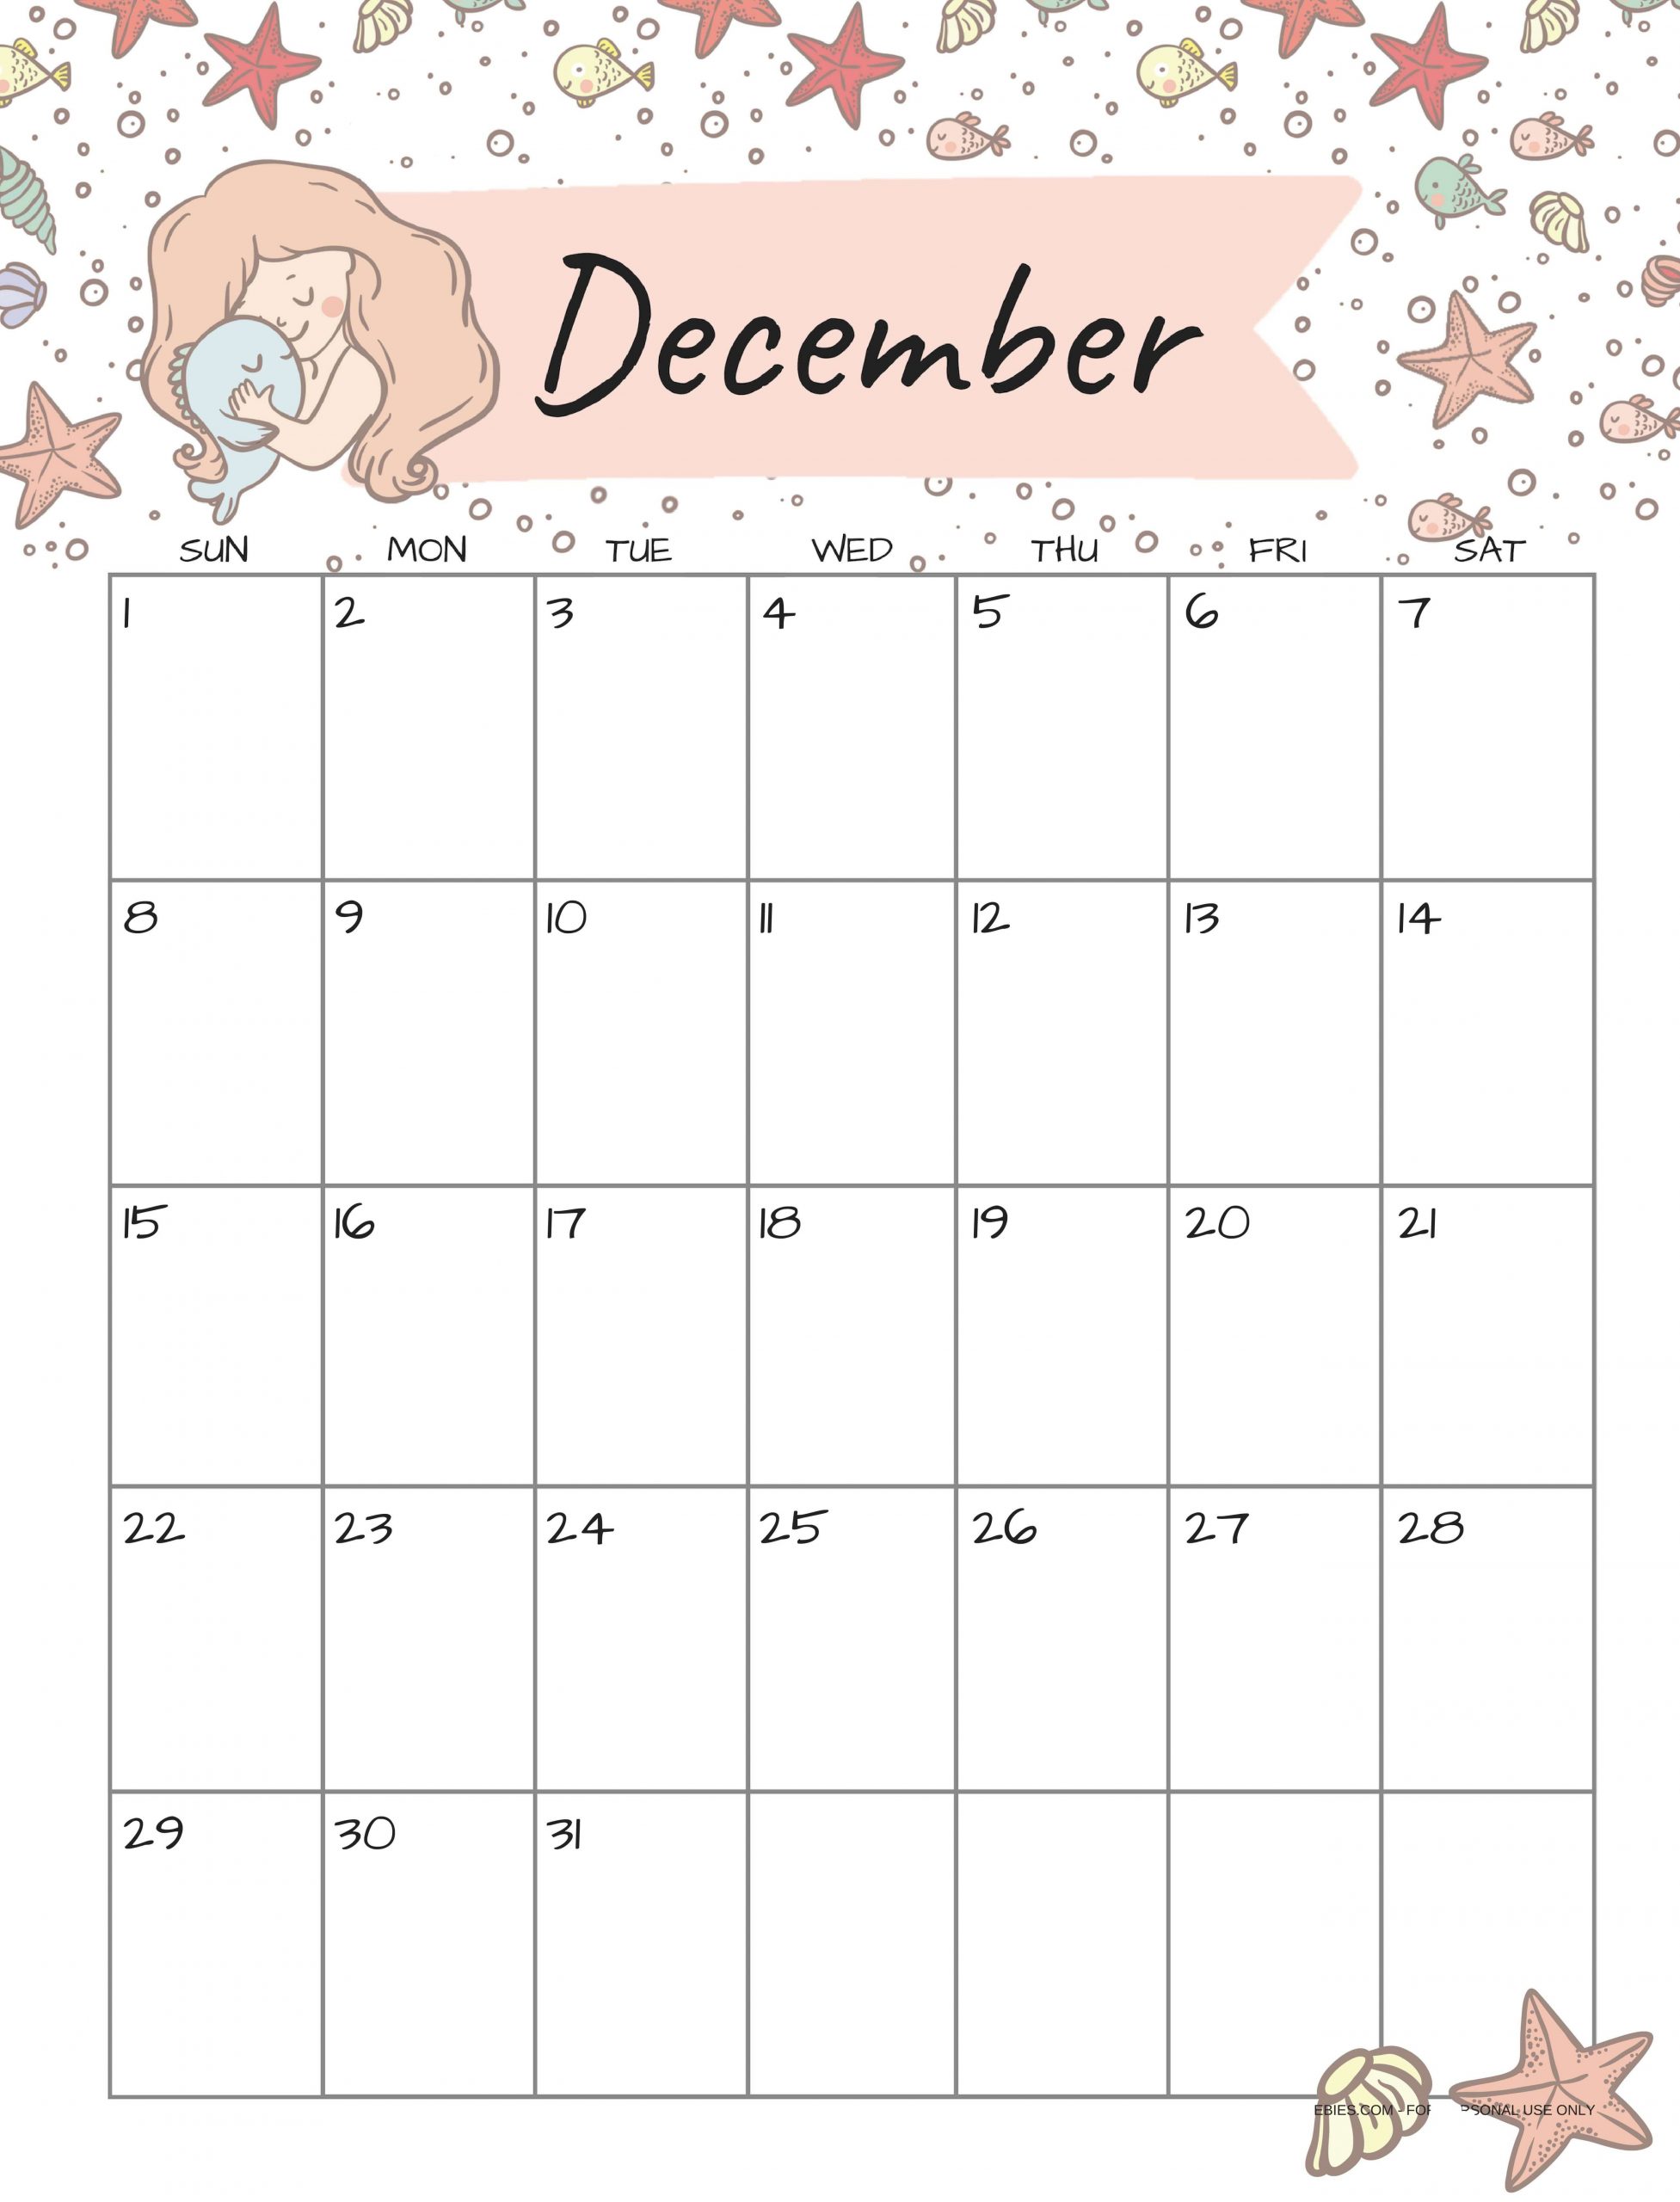 Cute December 2019 Calendar Colorful Template - 2019